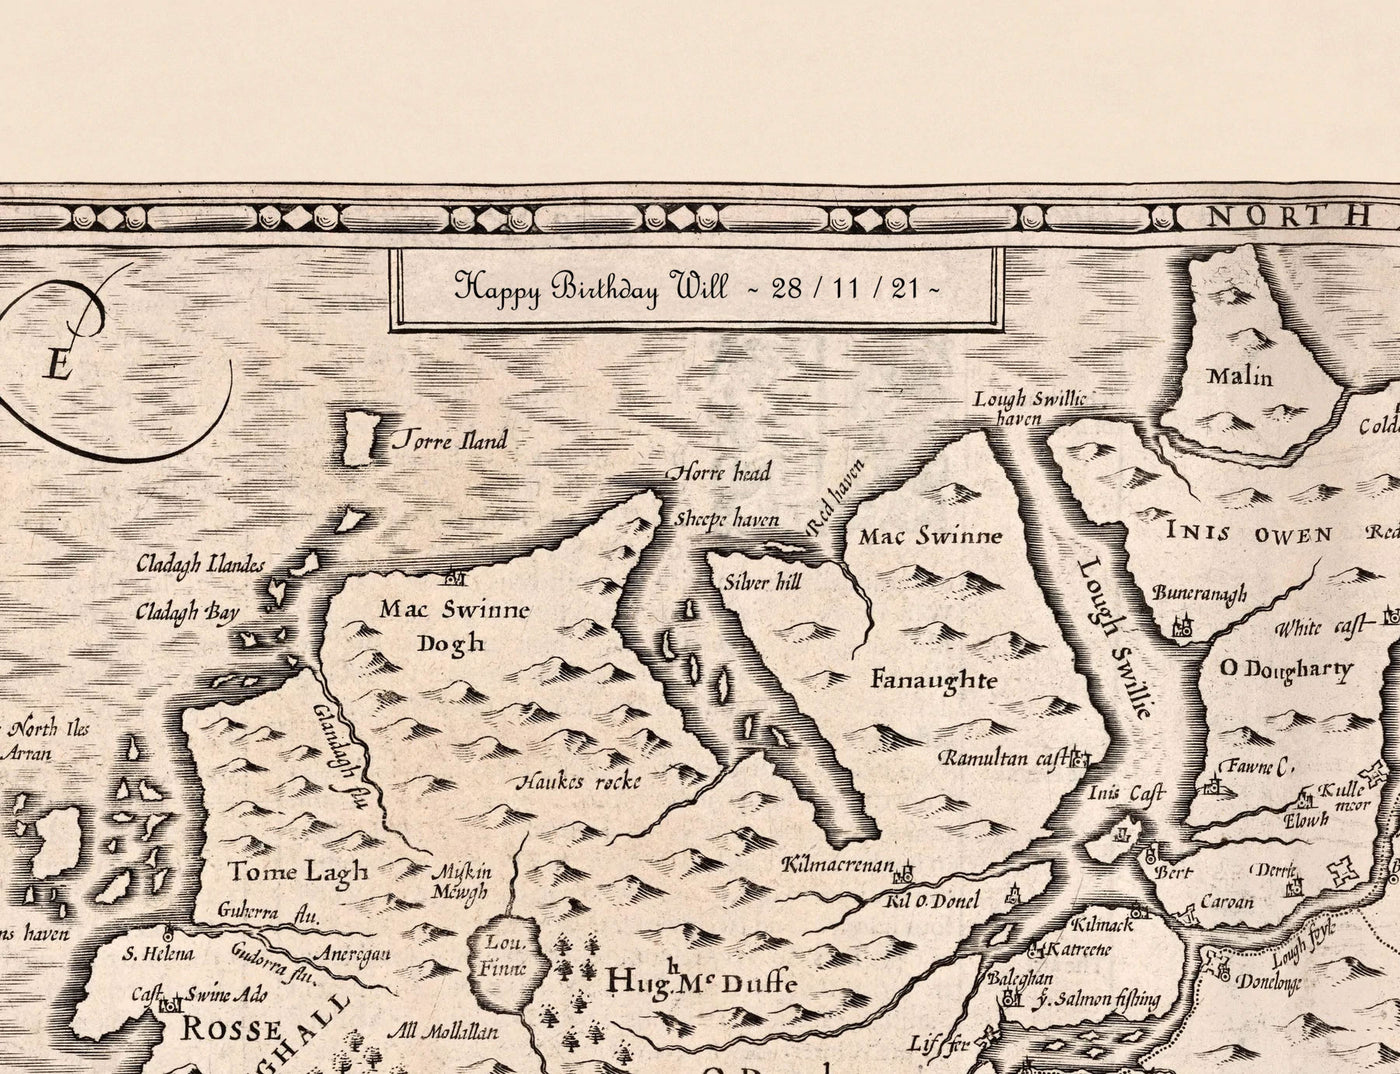 Alte Karte von Nordost-London im Jahr 1746 von John Rocque - Wanstead, Walthamstow, Leyton, Aldersbrook, Woodford, E7, E9, E10, E11, E12, E15